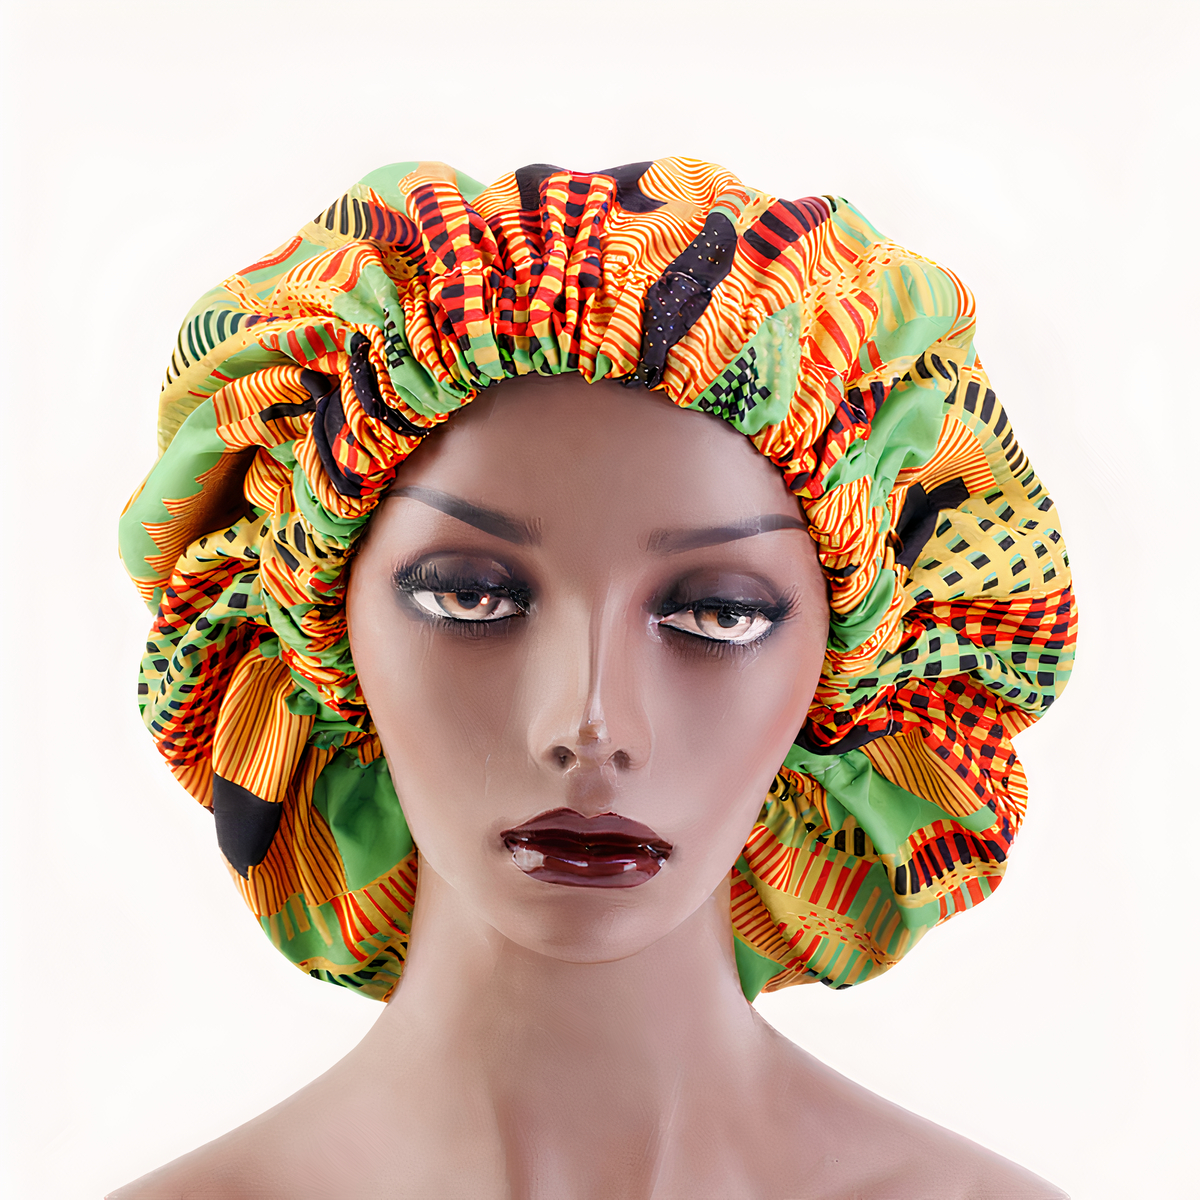 Bonnet en satin motif imprimé africain 8238 kyo9vb